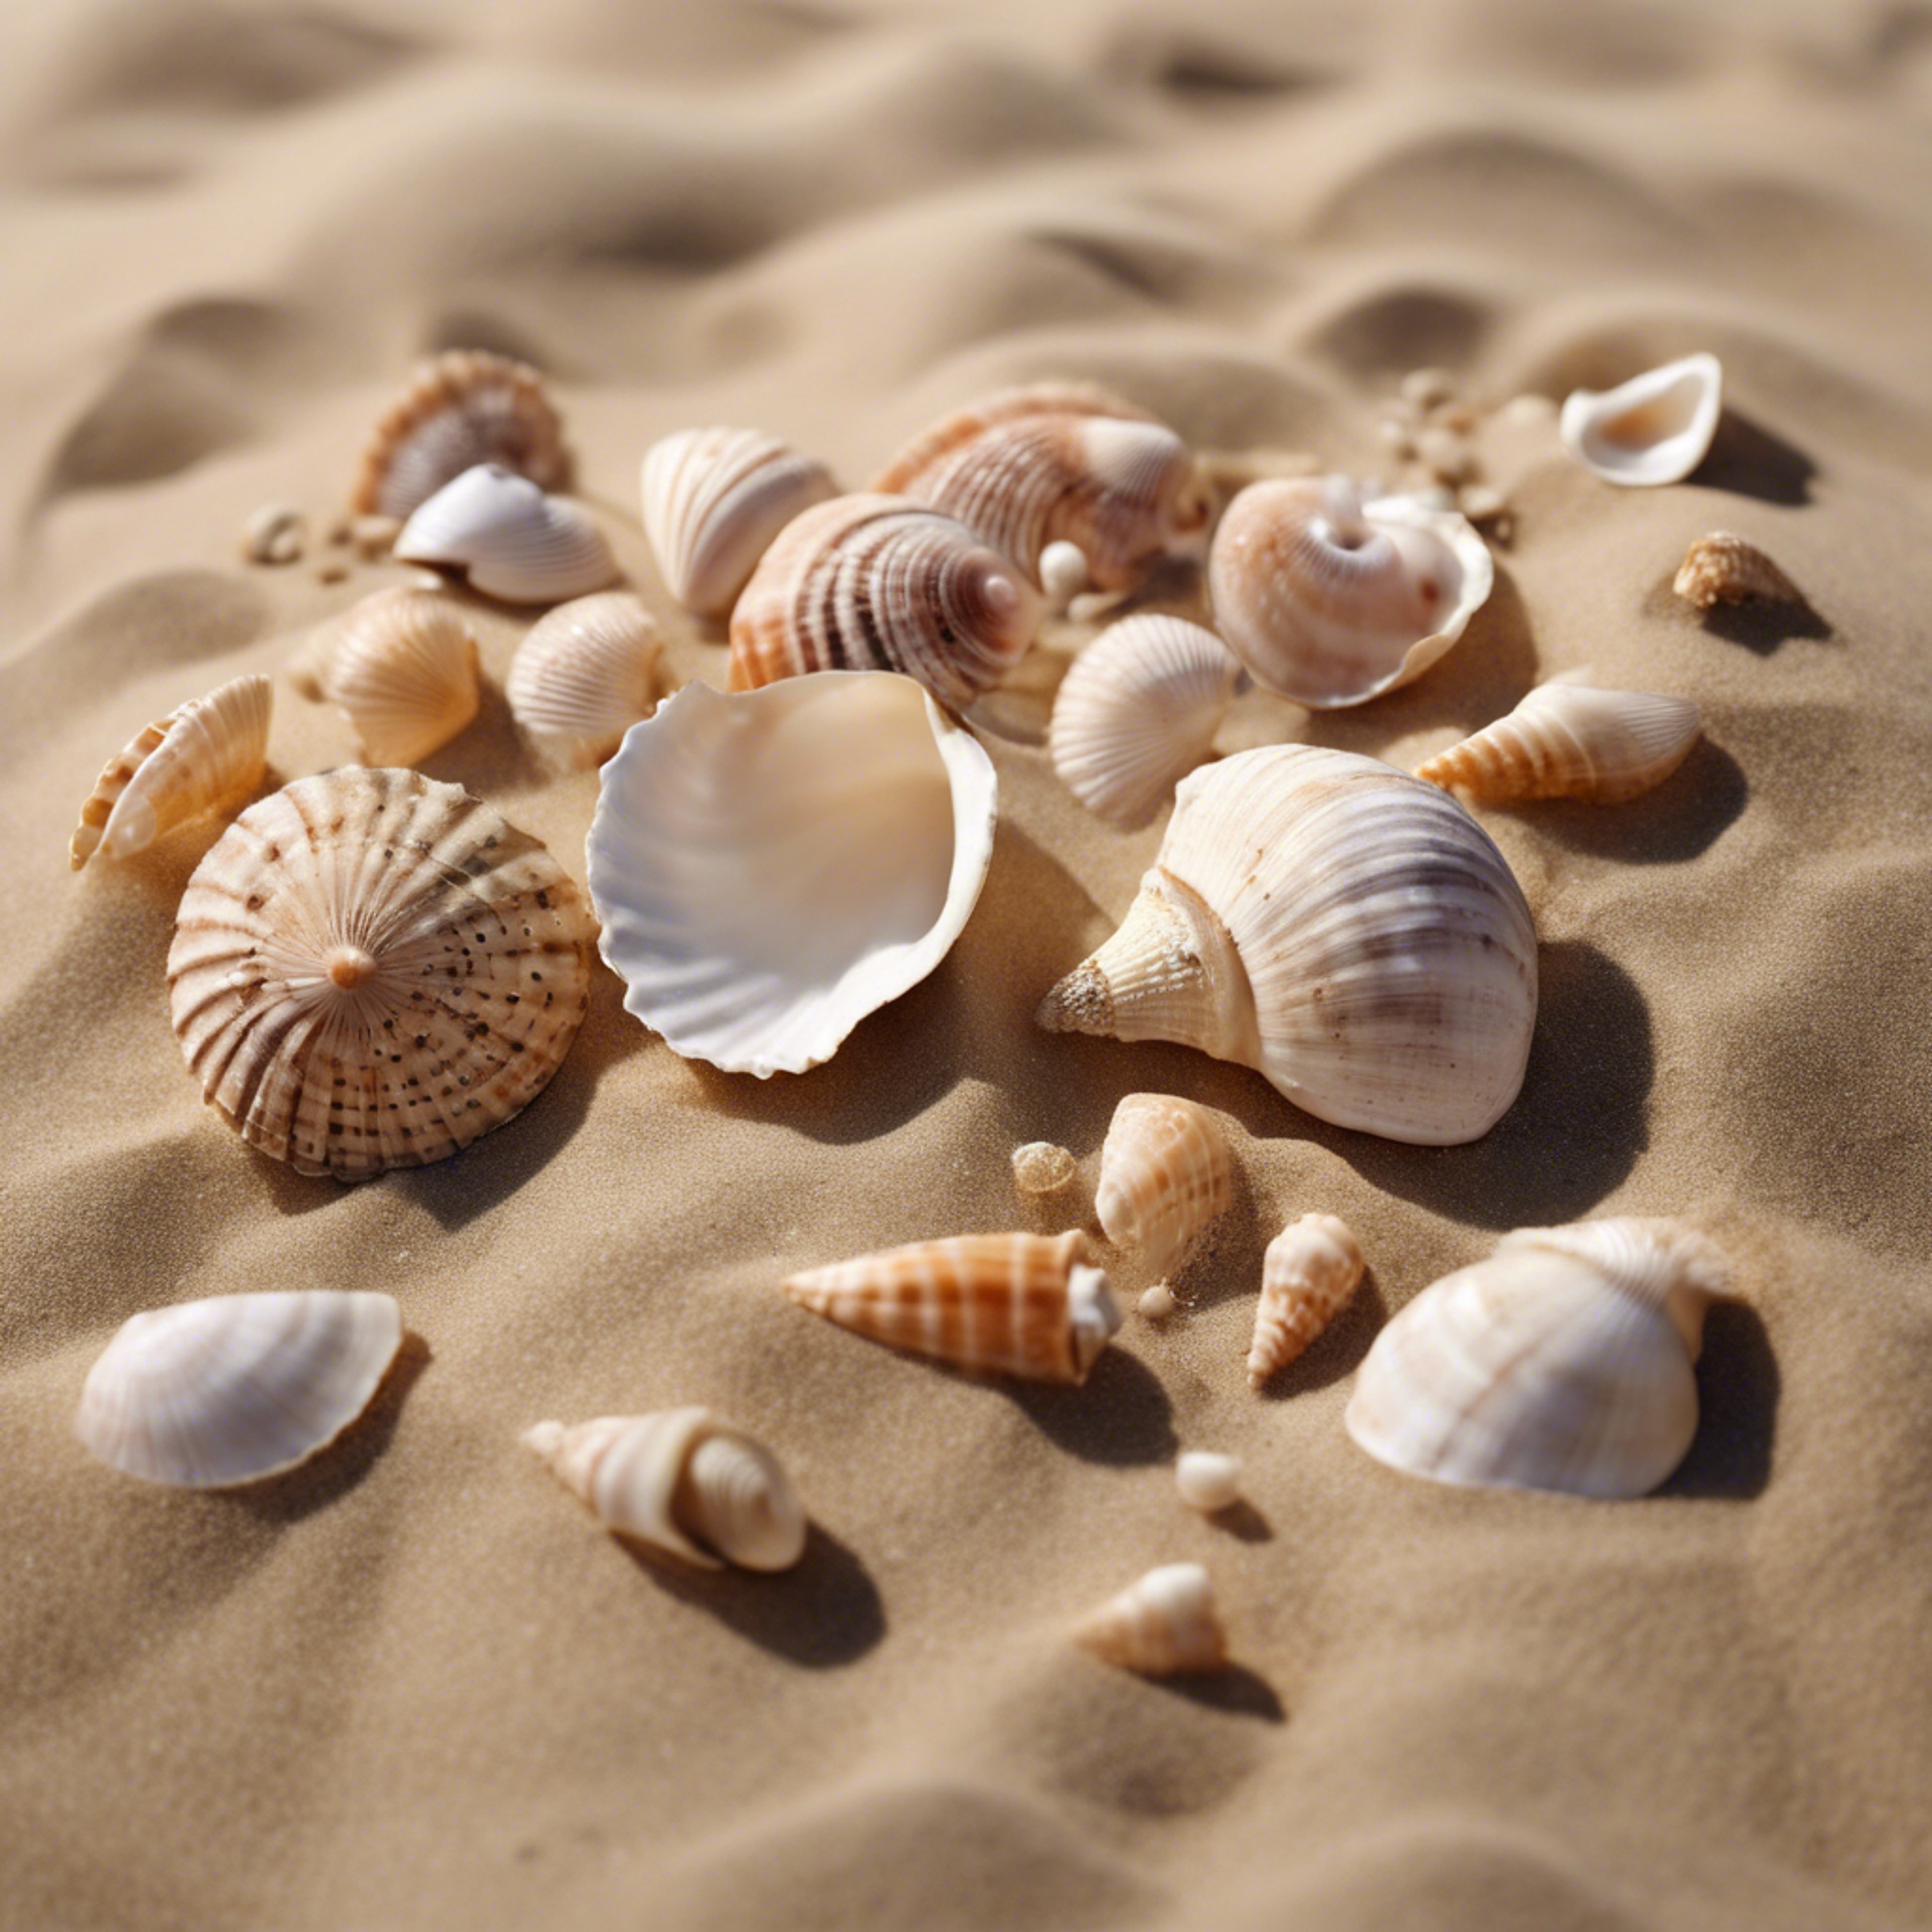 An arrangement of seashells of various sizes in a cool beige sand. duvar kağıdı[d4509fc1f43d45f6bba6]